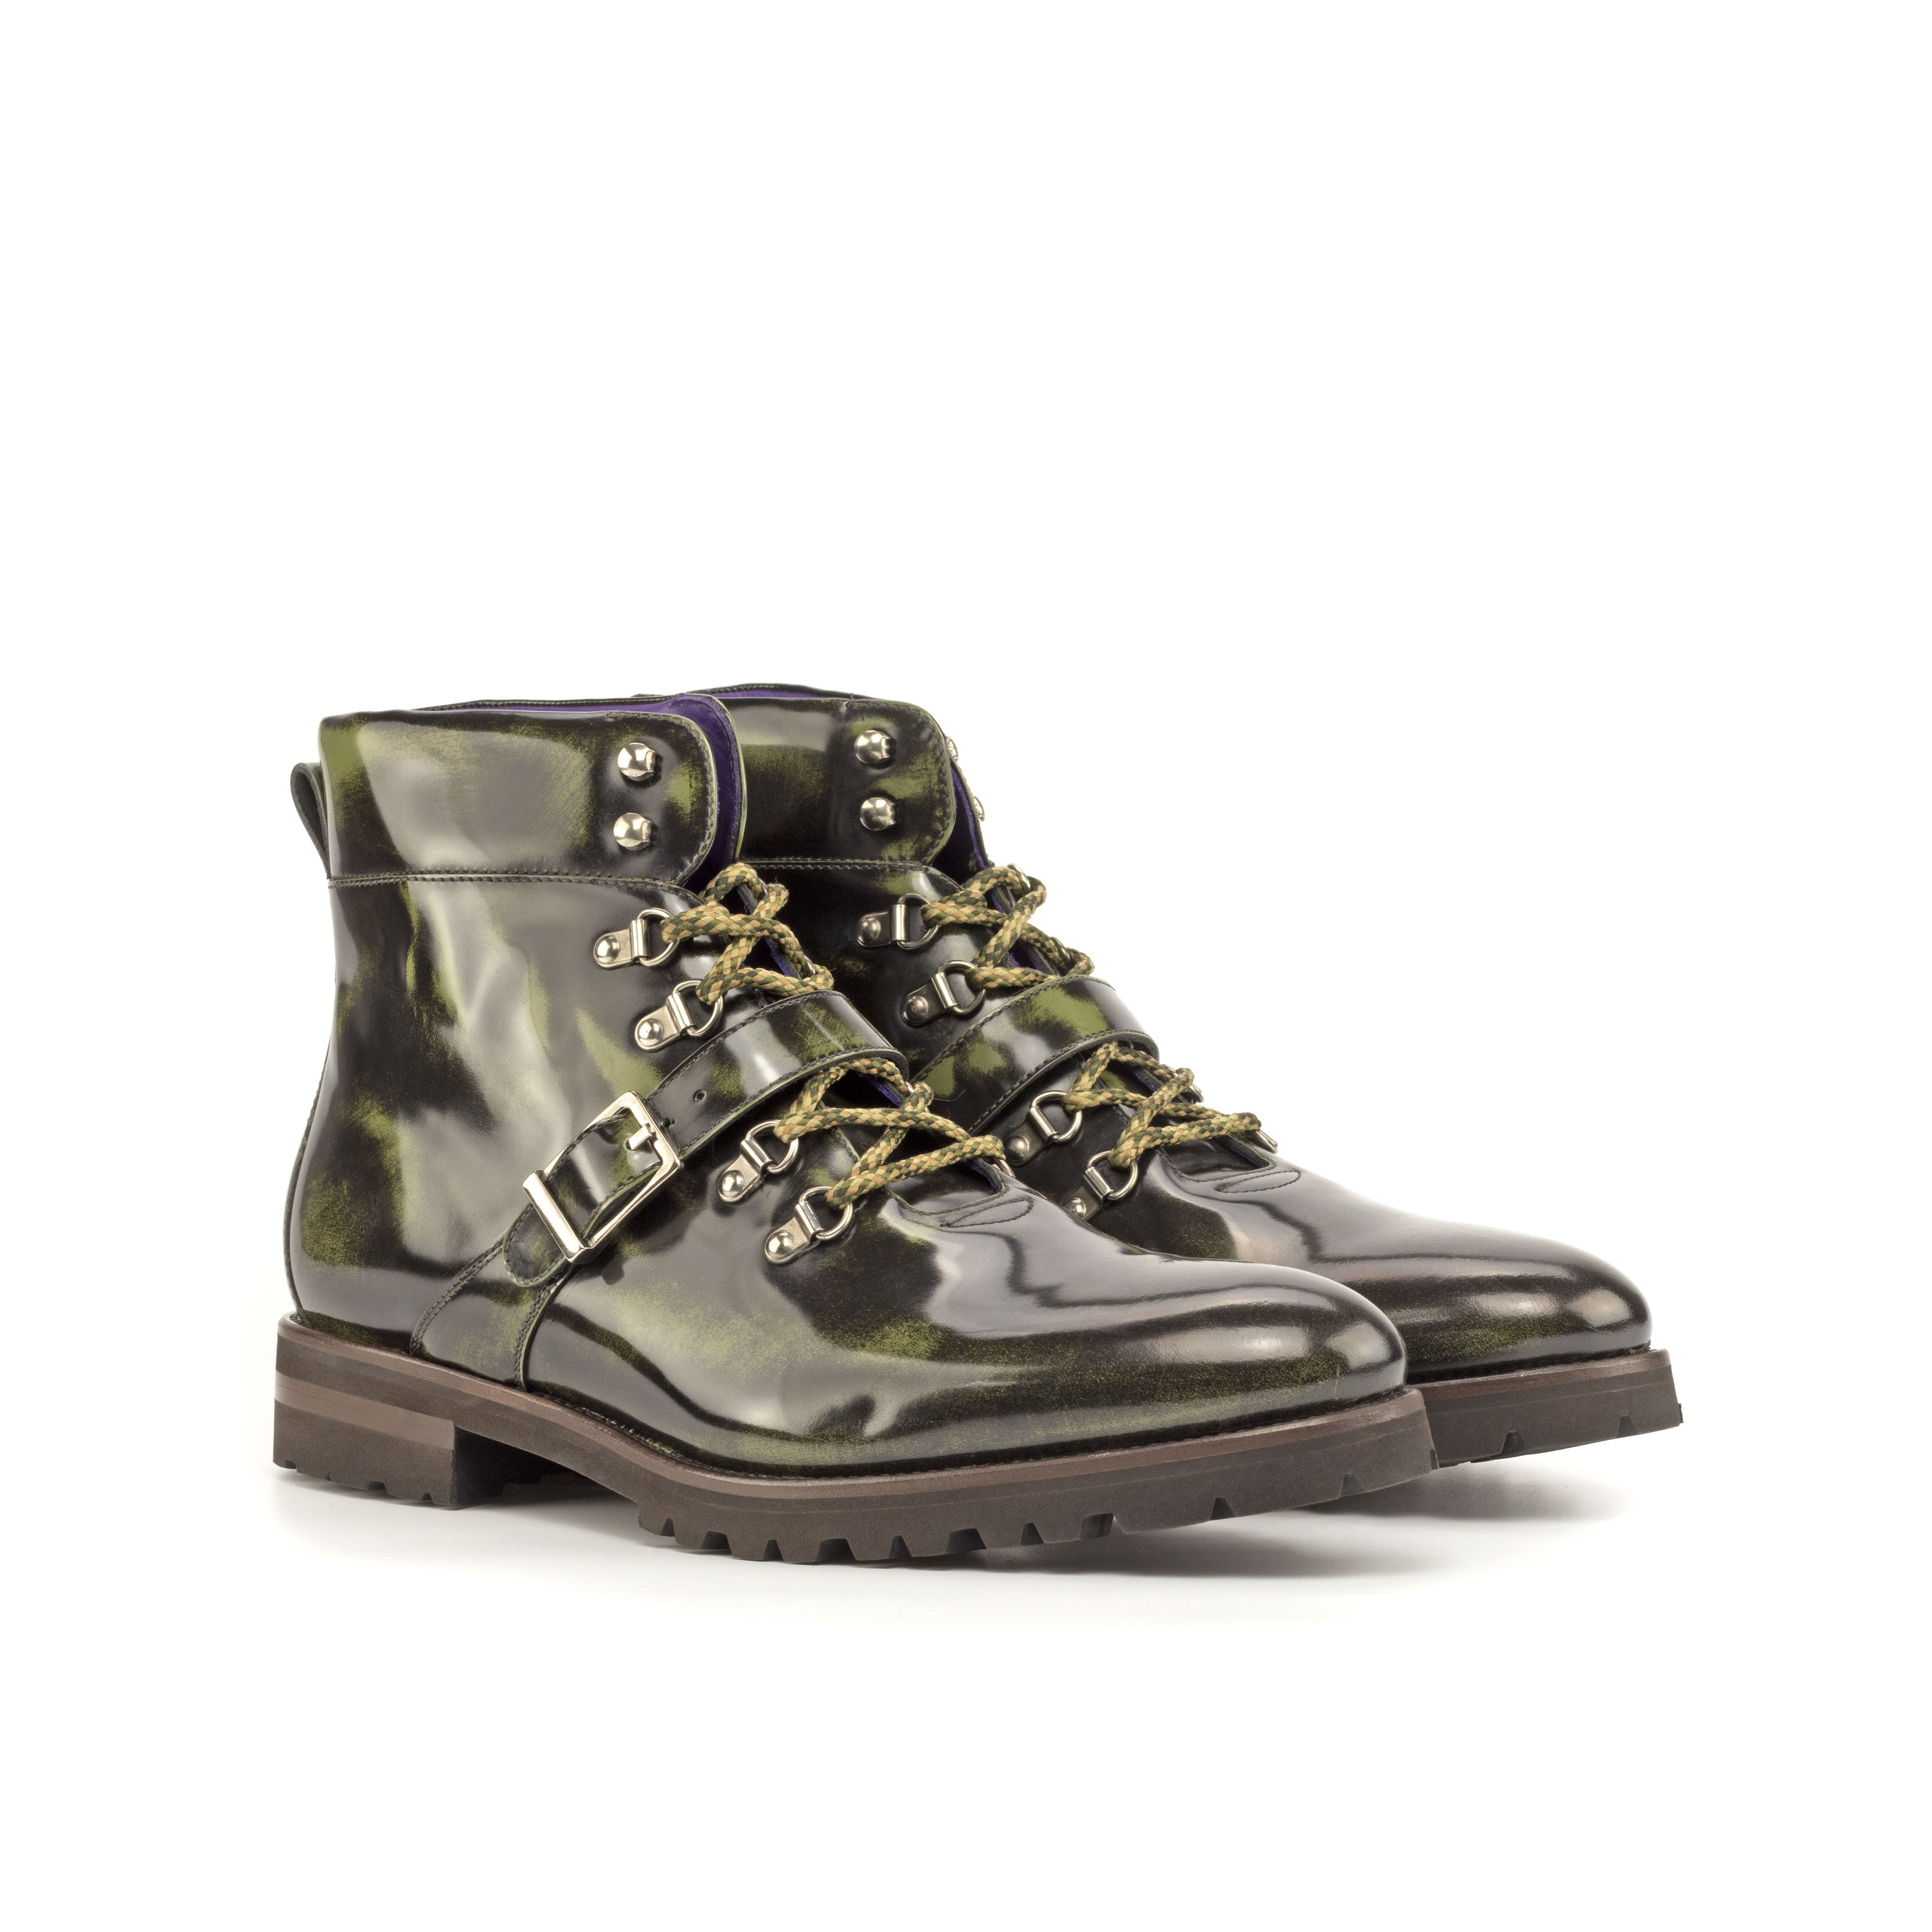 Florantic Military Polished Calf Hiking Boot